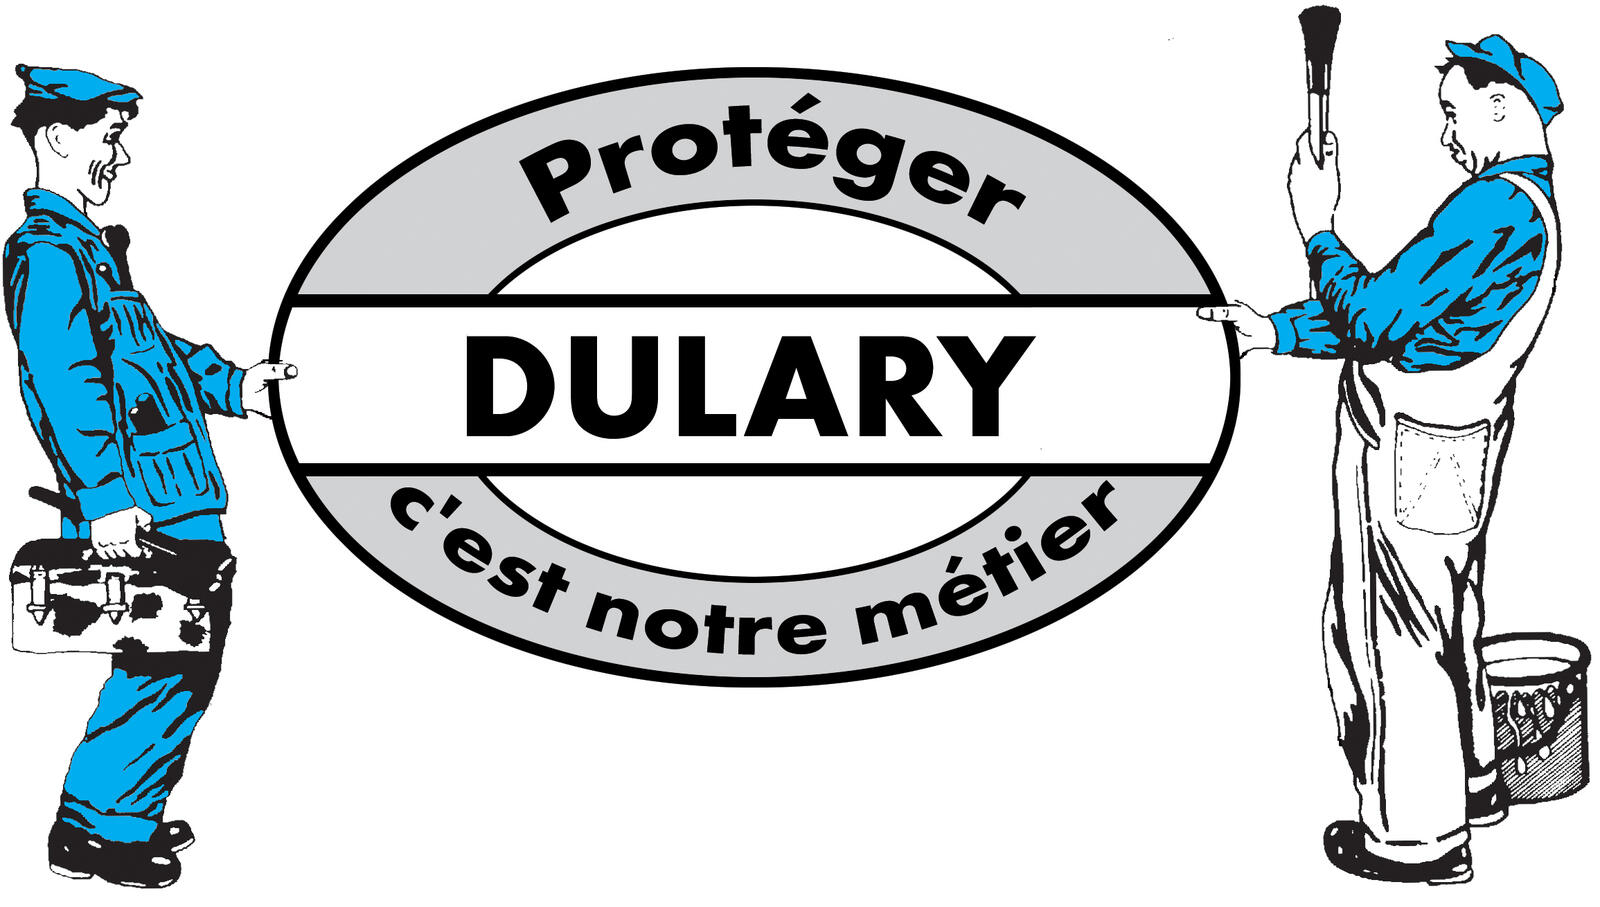 1974-logo-dulary-ancien